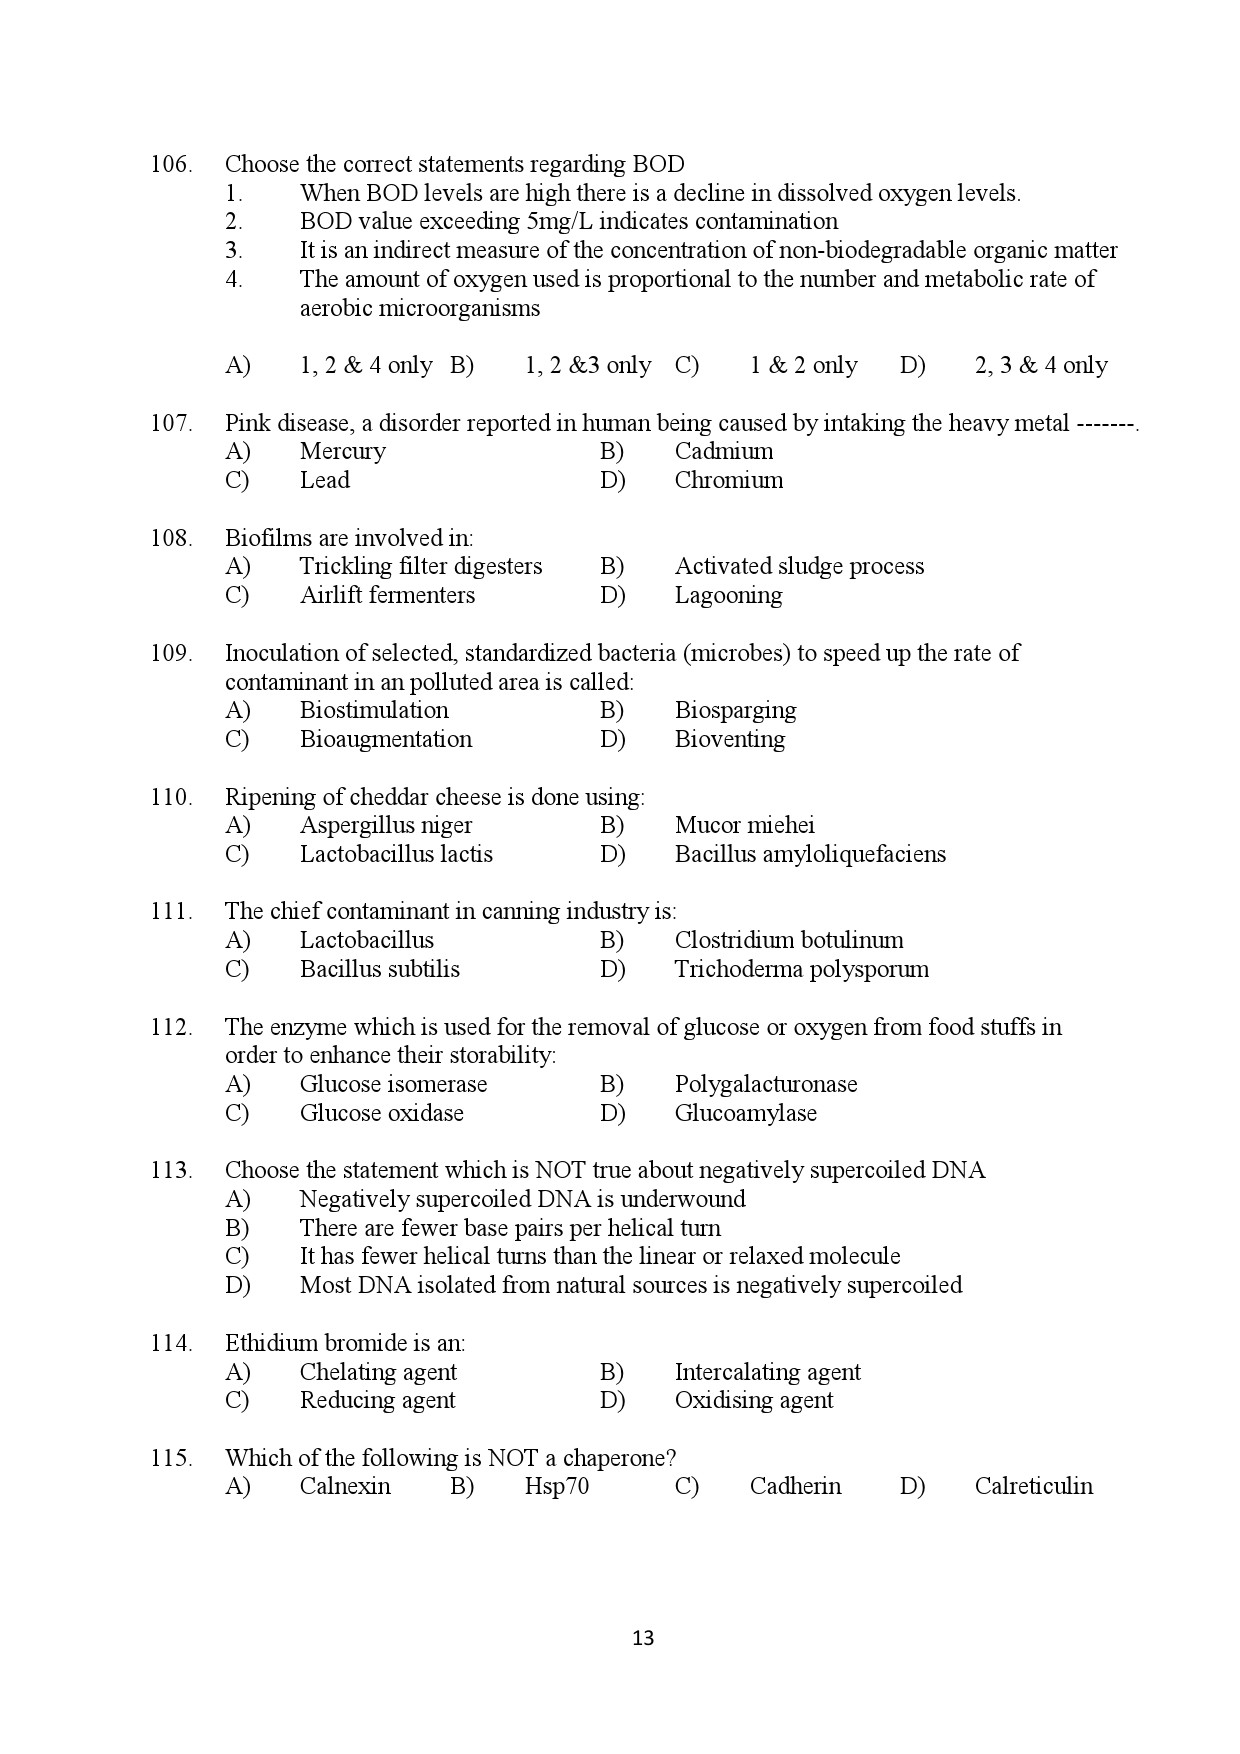 Kerala SET Biotechnology Exam Question Paper February 2020 13